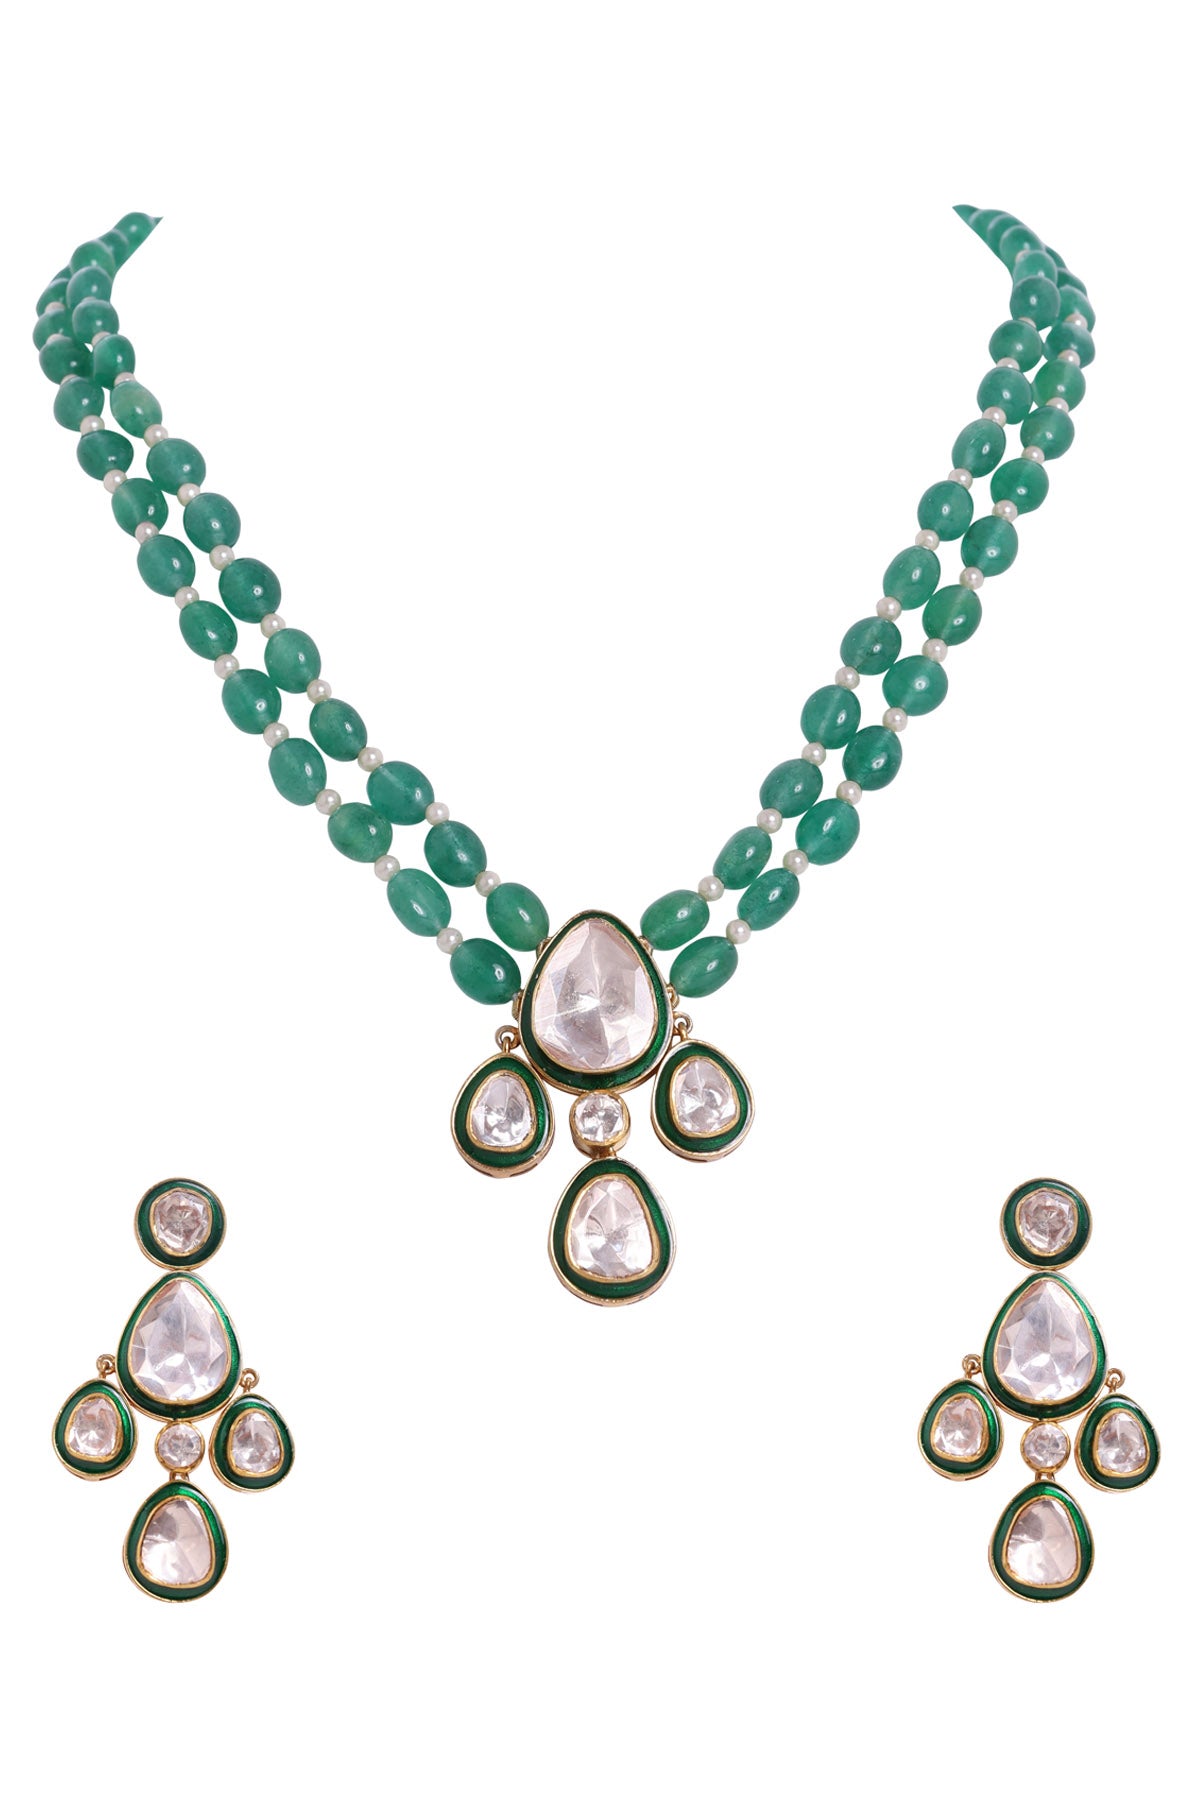 Green Meenakari Necklace Set